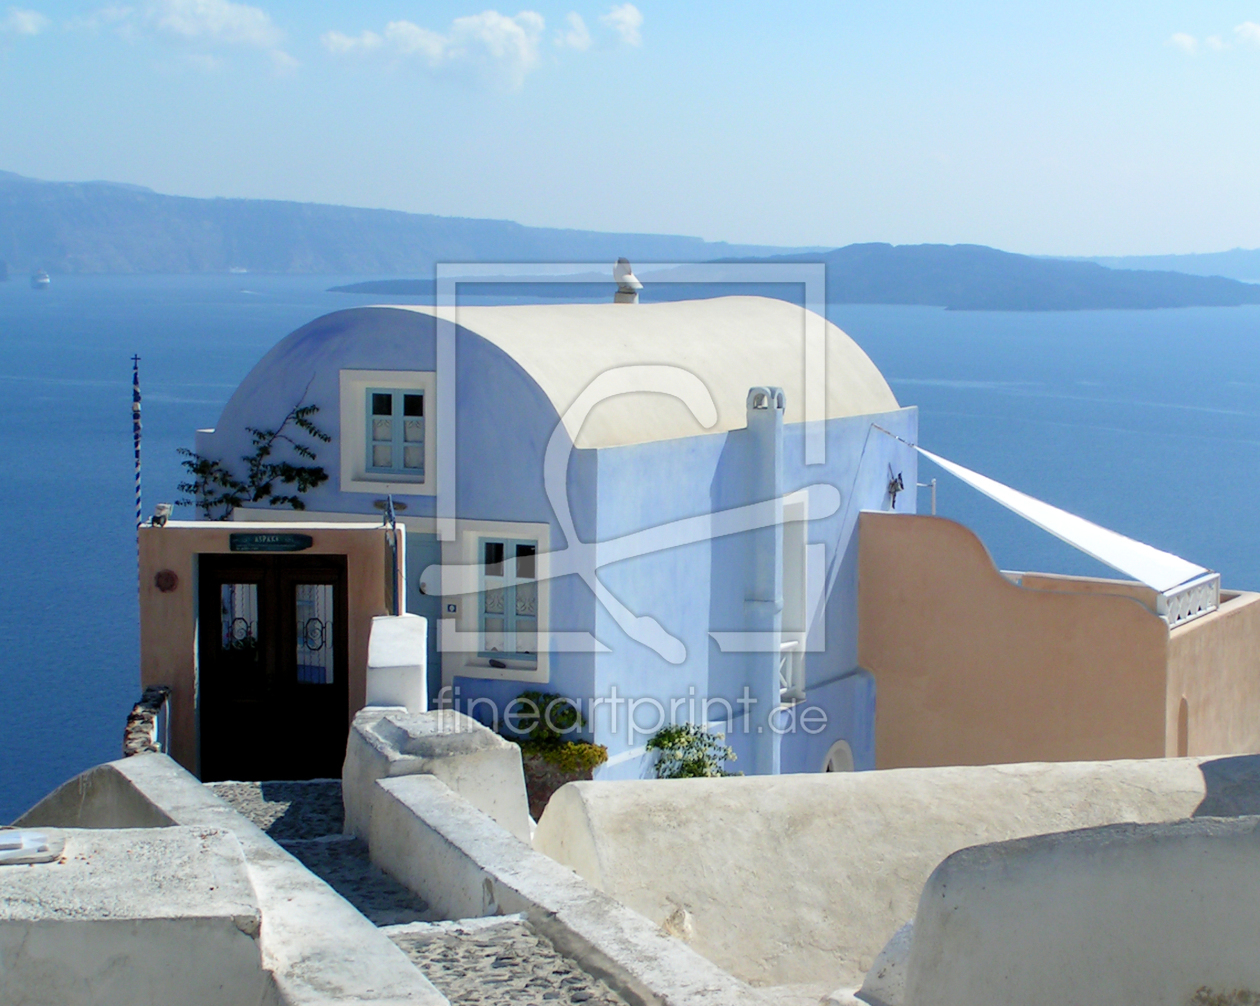 Bild-Nr.: 10111978 Haus am Meer - Santorini erstellt von Holgi73